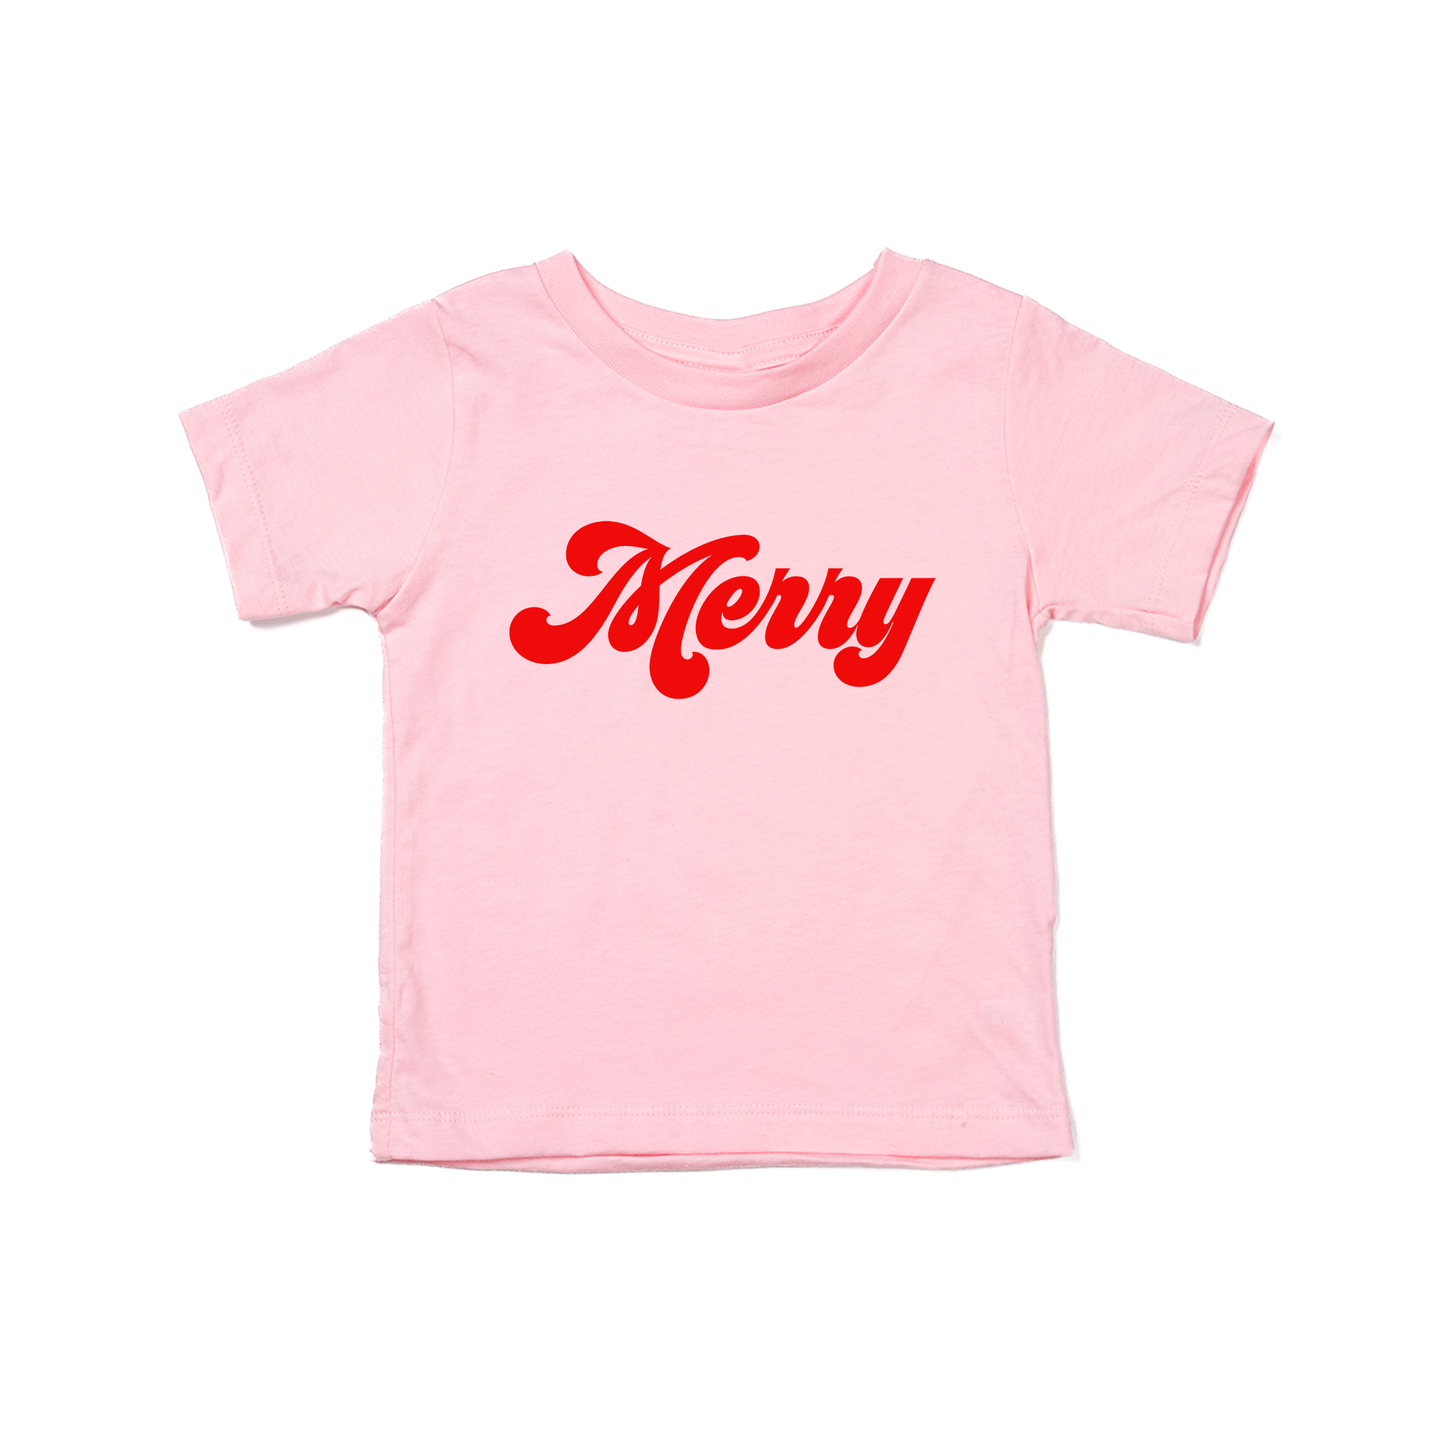 Merry (Retro, Red) - Kids Tee (Pink)